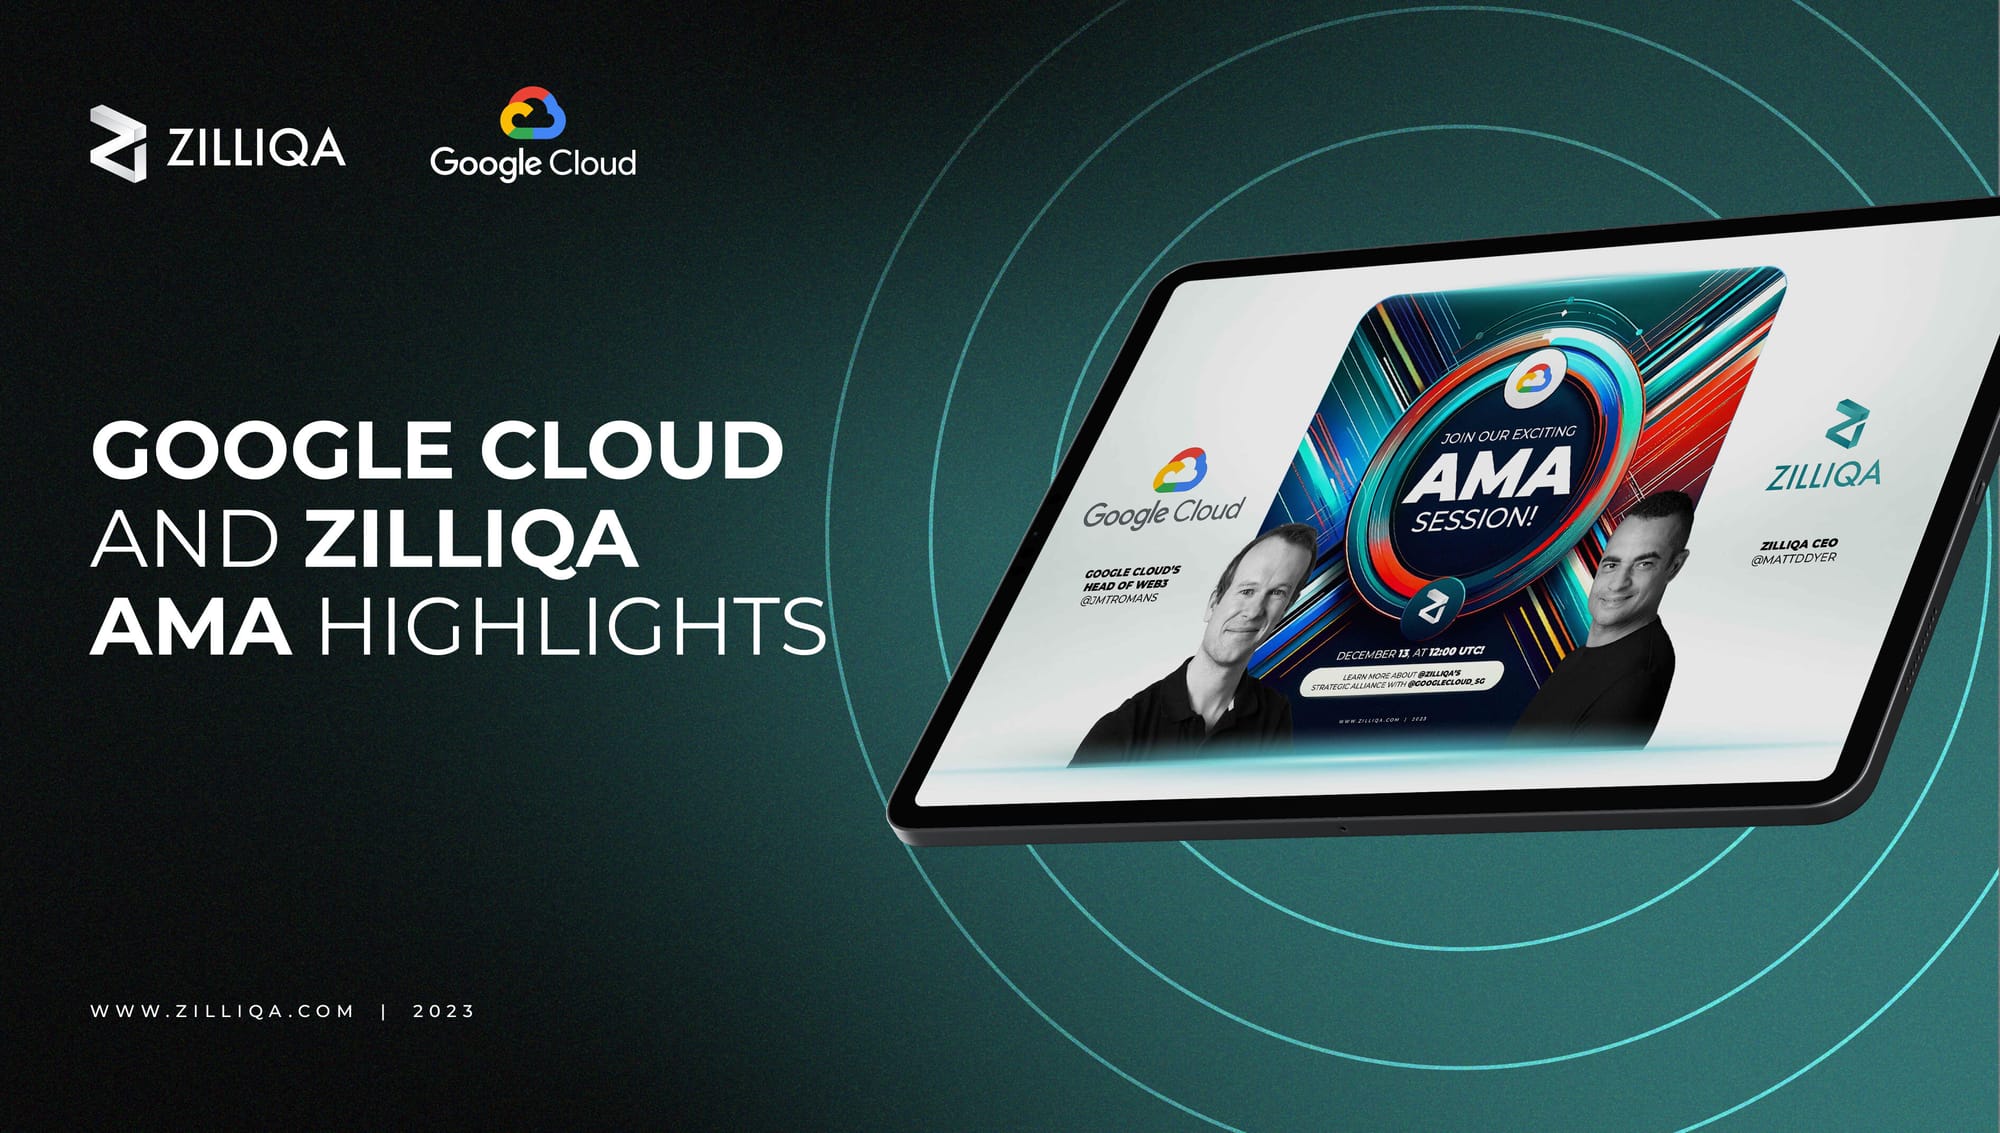 AMA Highlights - Zilliqa Group’s strategic alliance with Google Cloud